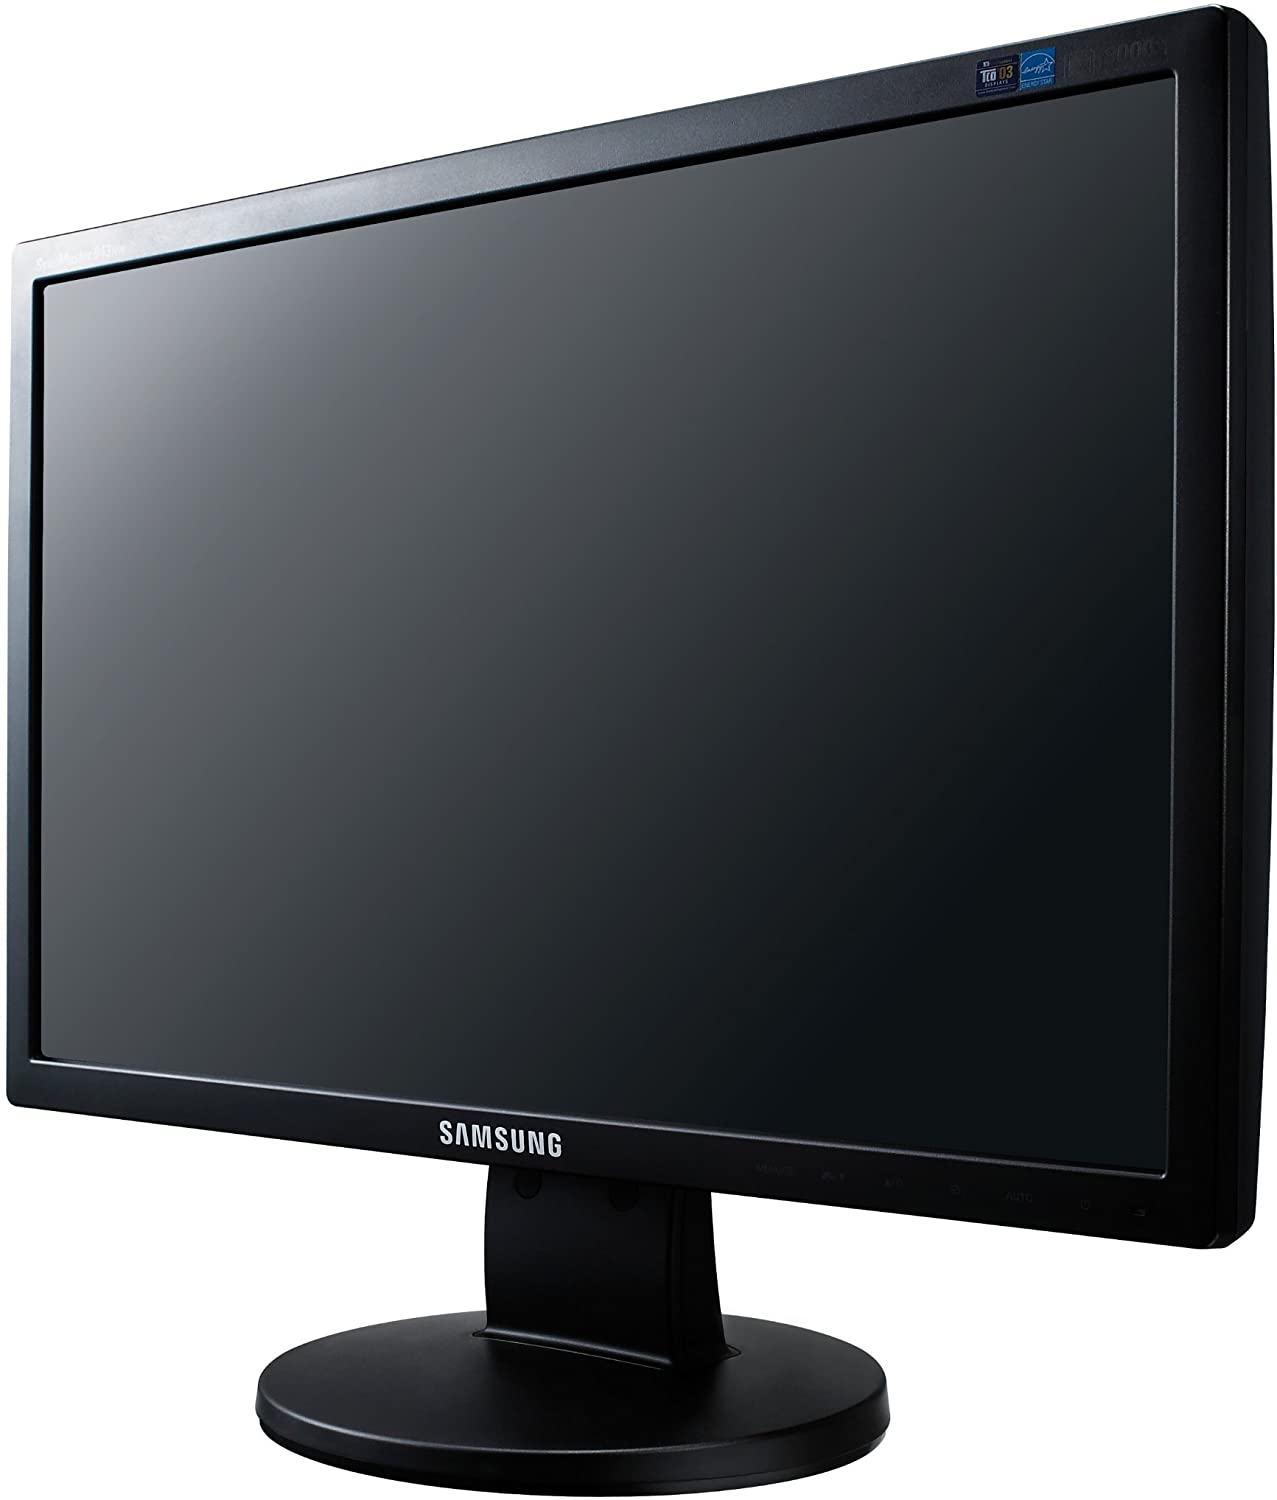 Samsung SyncMaster 943NW Monitor LCD 19